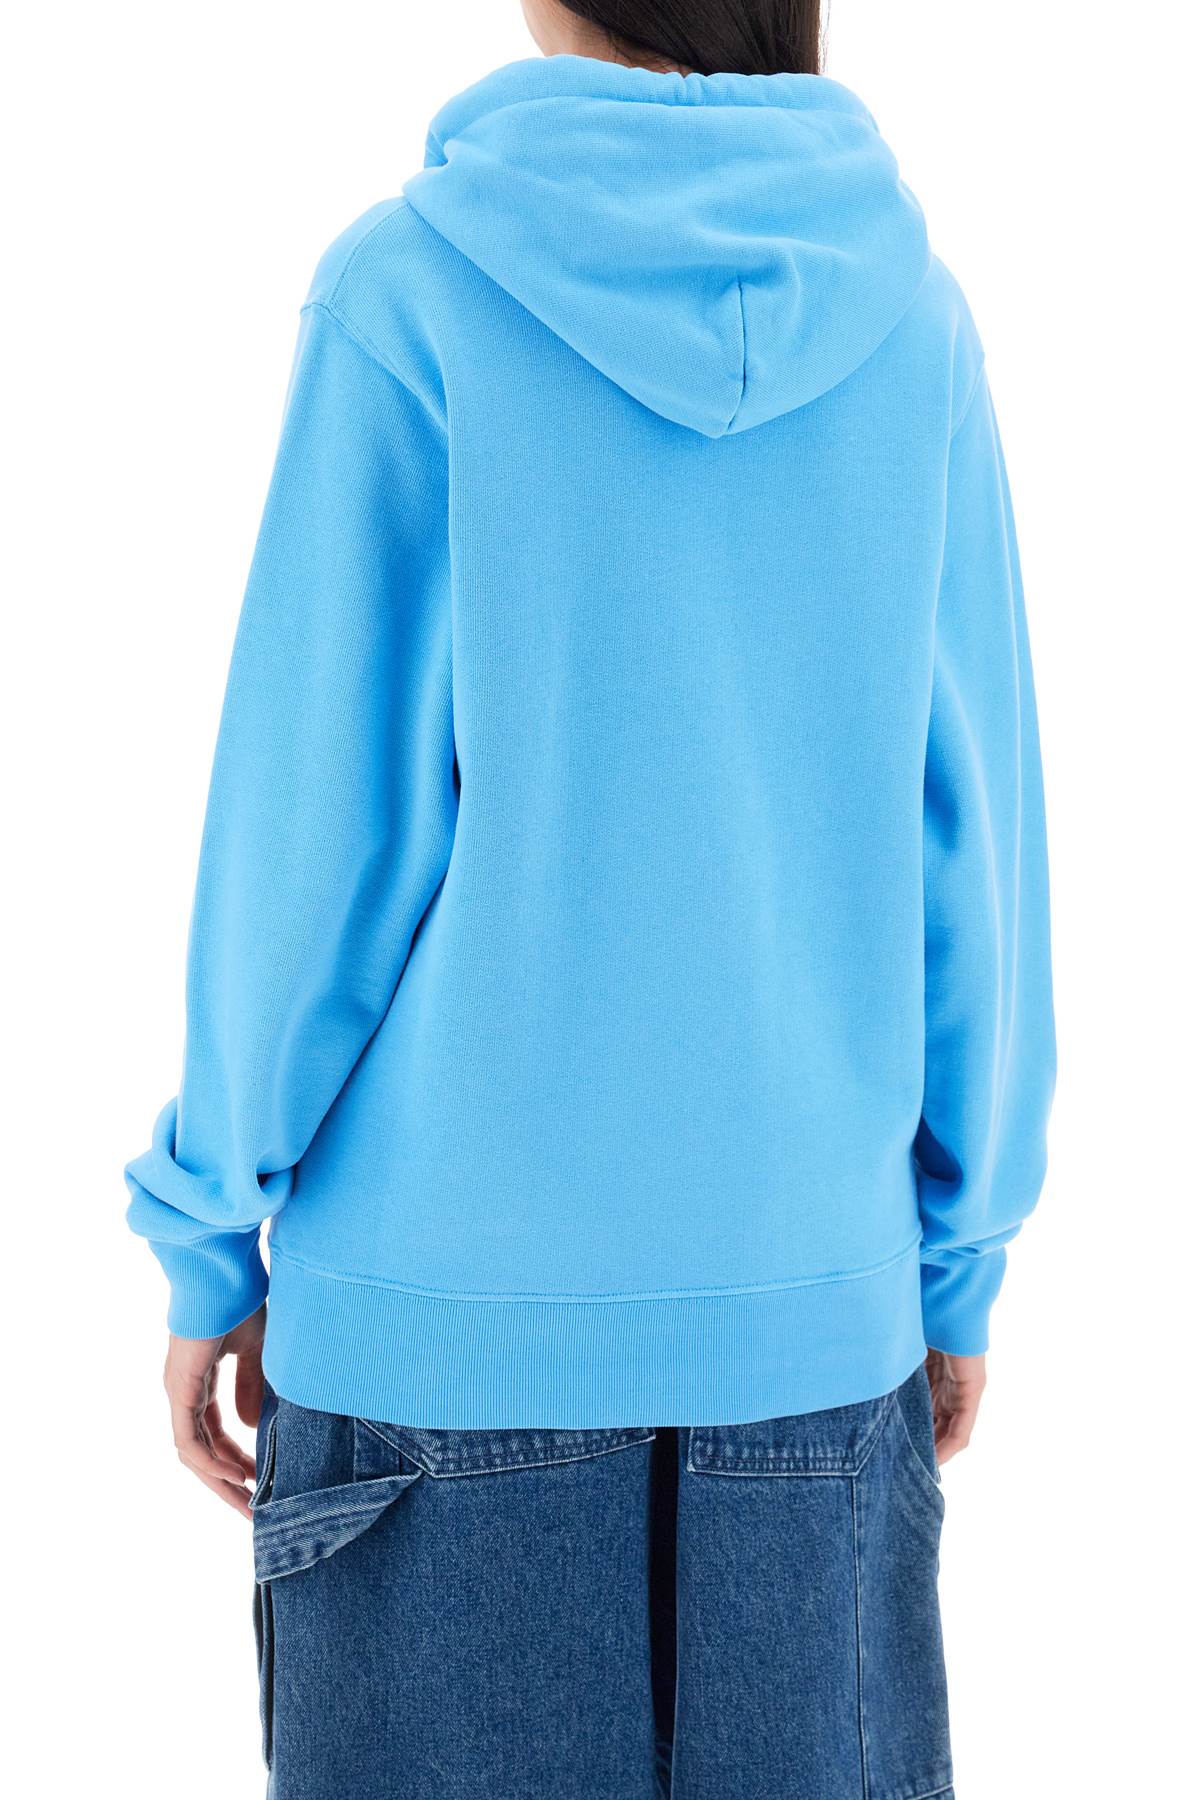 Shop Ambush Multicord Hood Sweatshirt